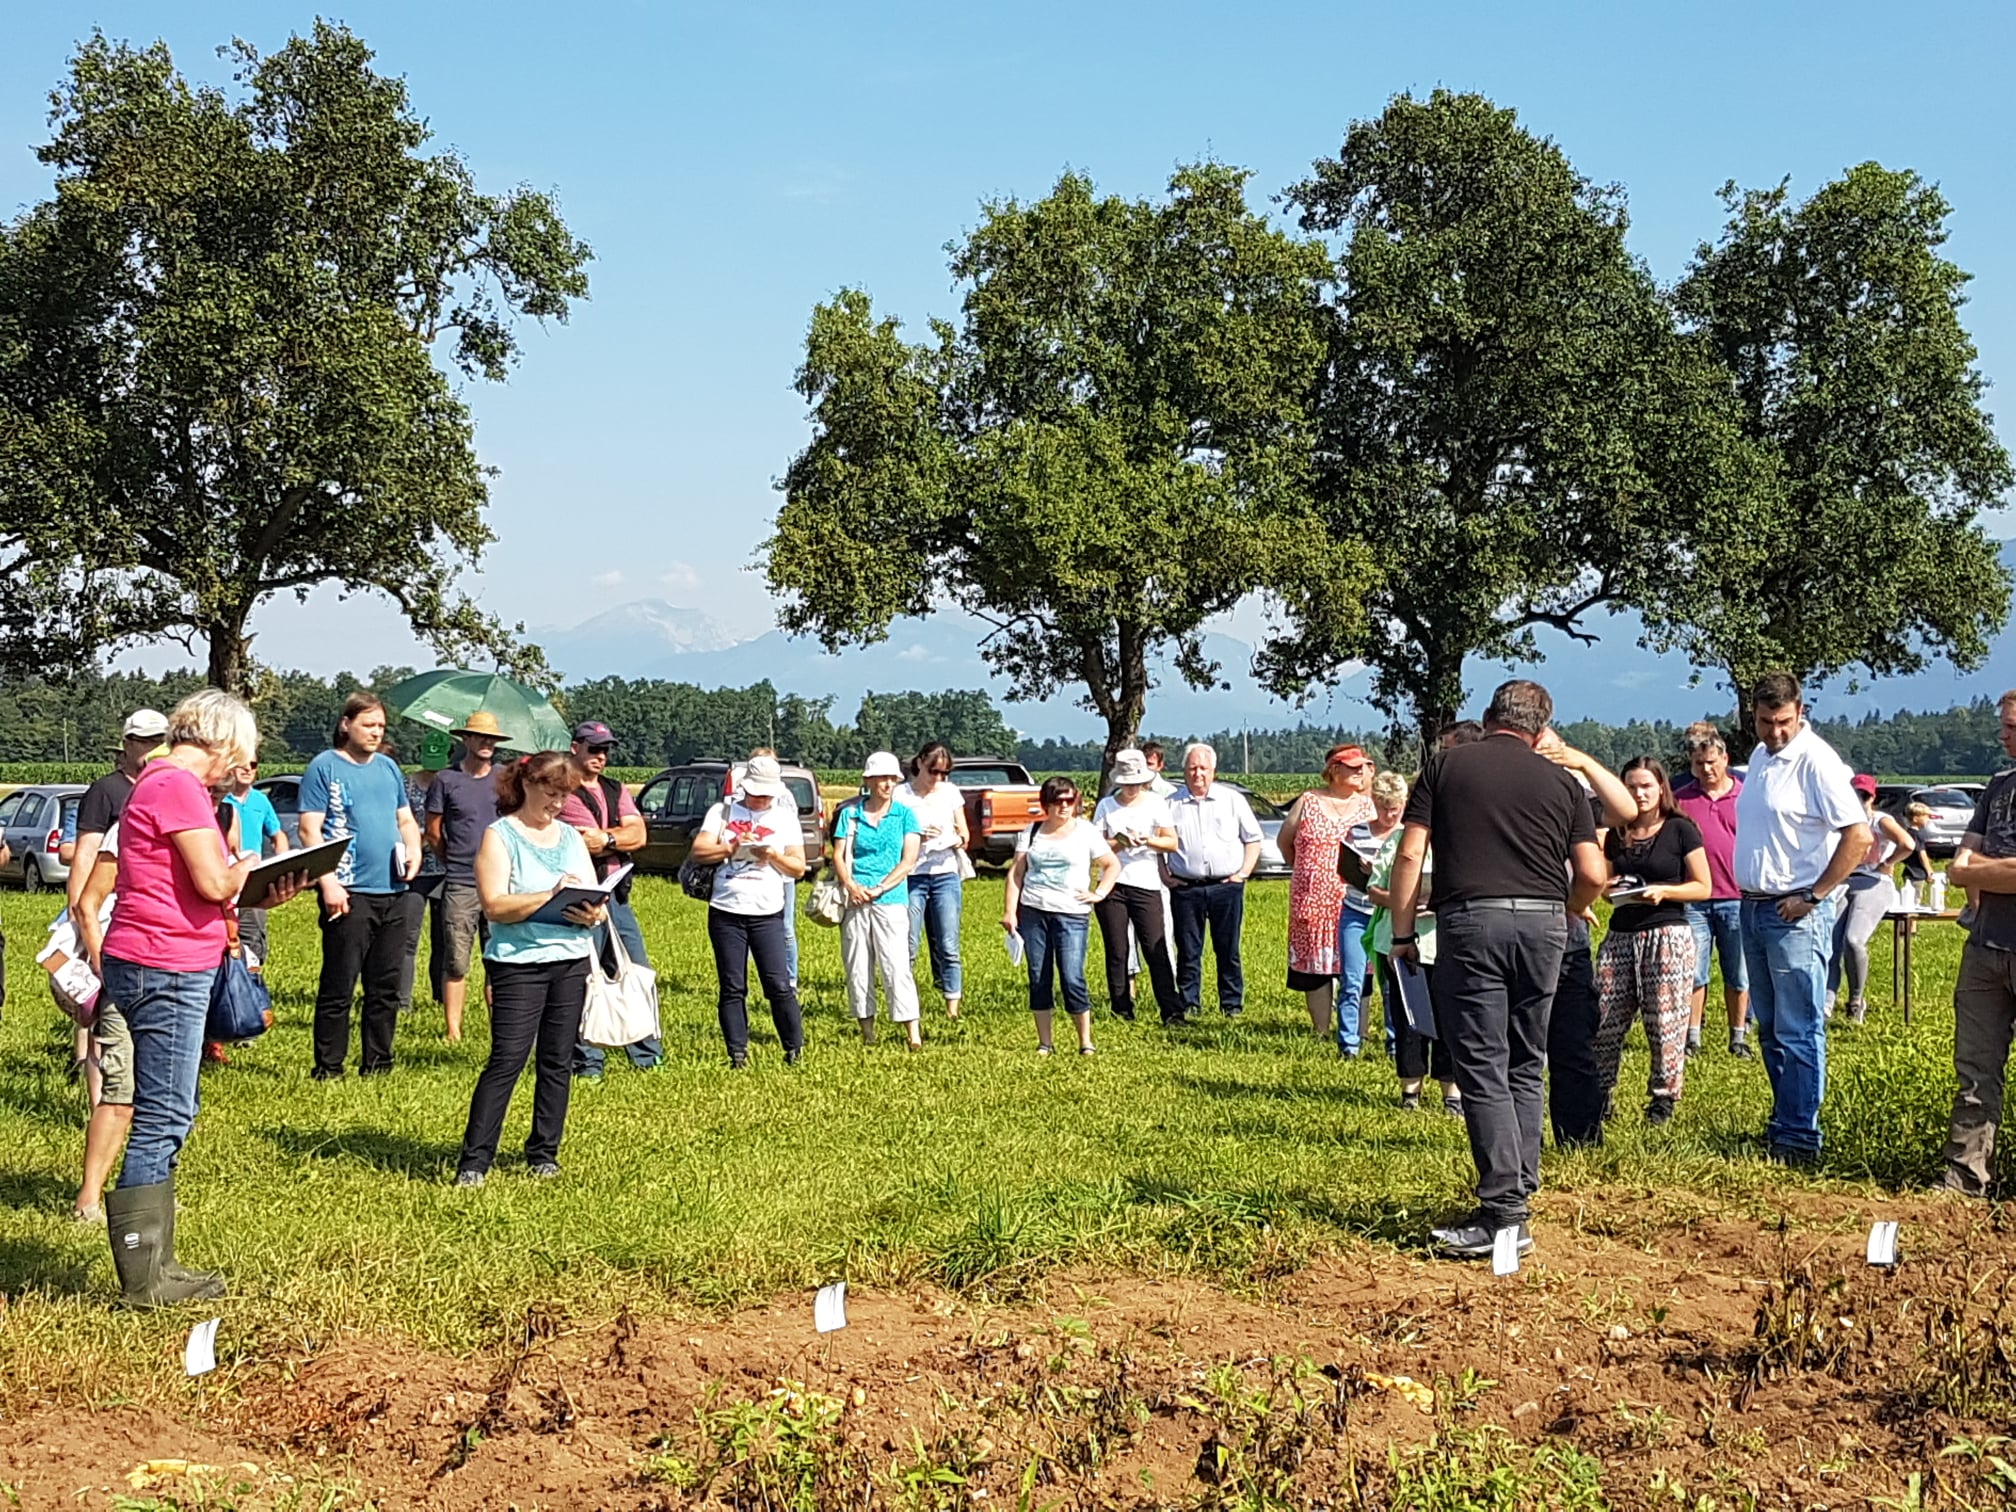 Organic farm Kozina grows 14 organic potato varieties